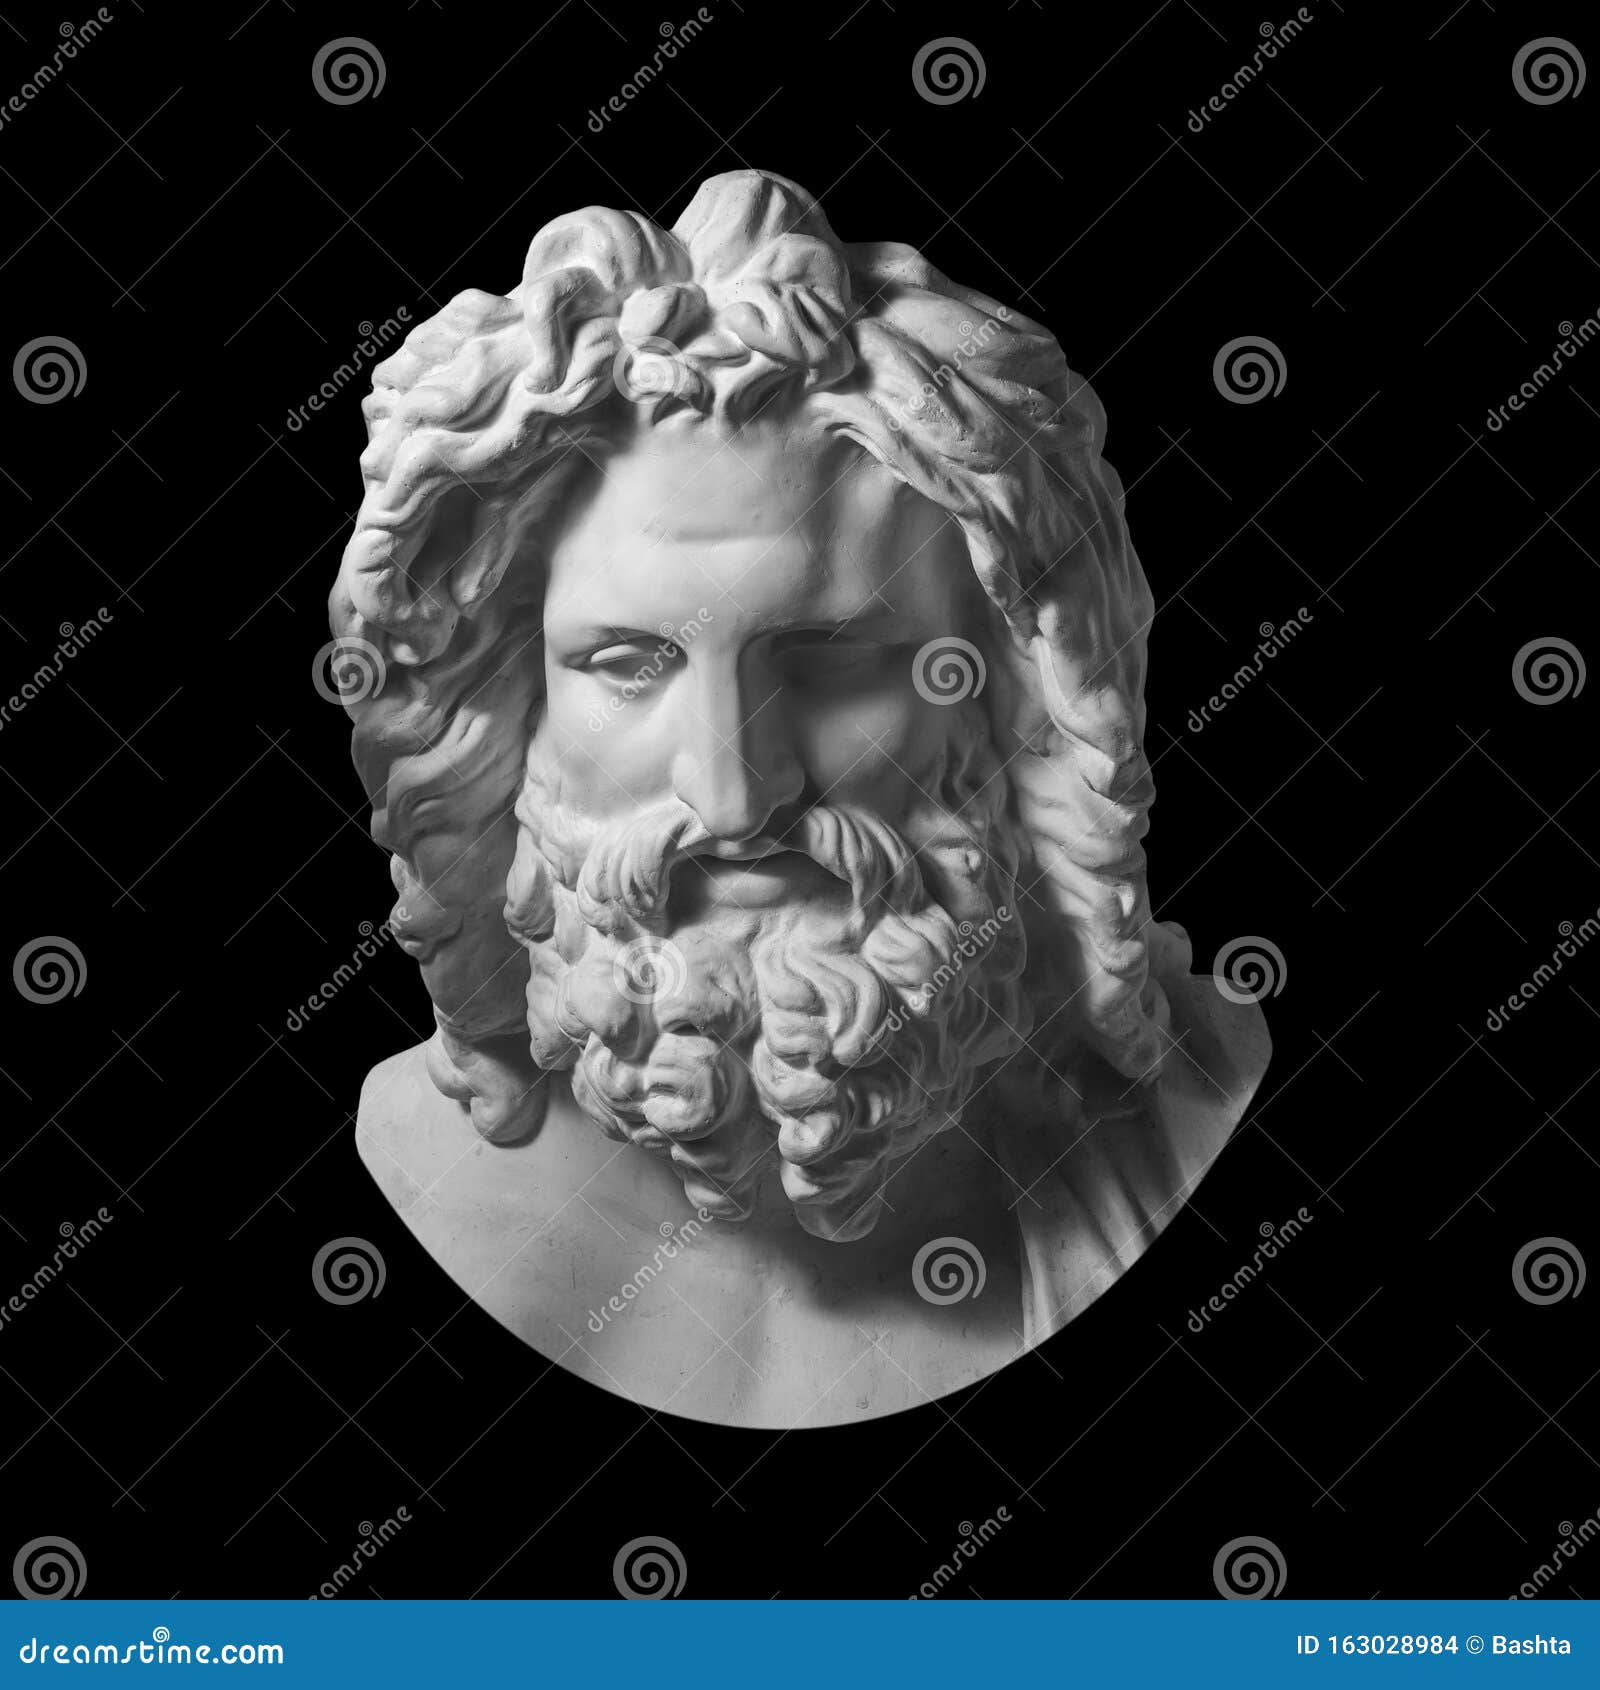 gypsum copy of antique statue zeus head  on black background. plaster sculpture man face with beard.